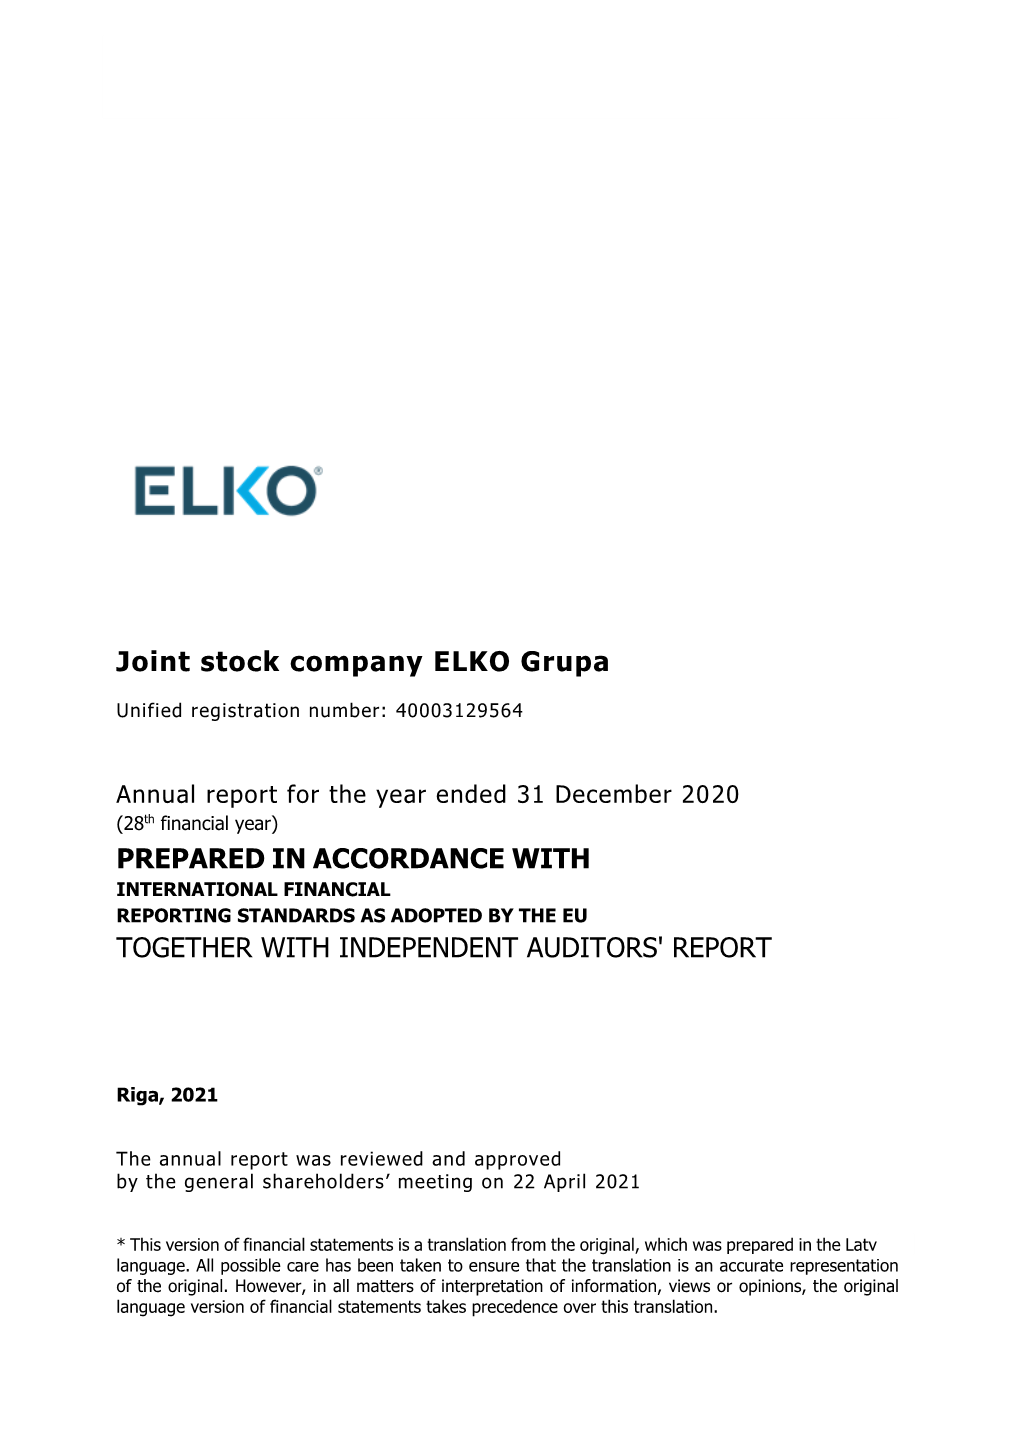 Joint Stock Company ELKO Grupa PREPARED in ACCORDANCE